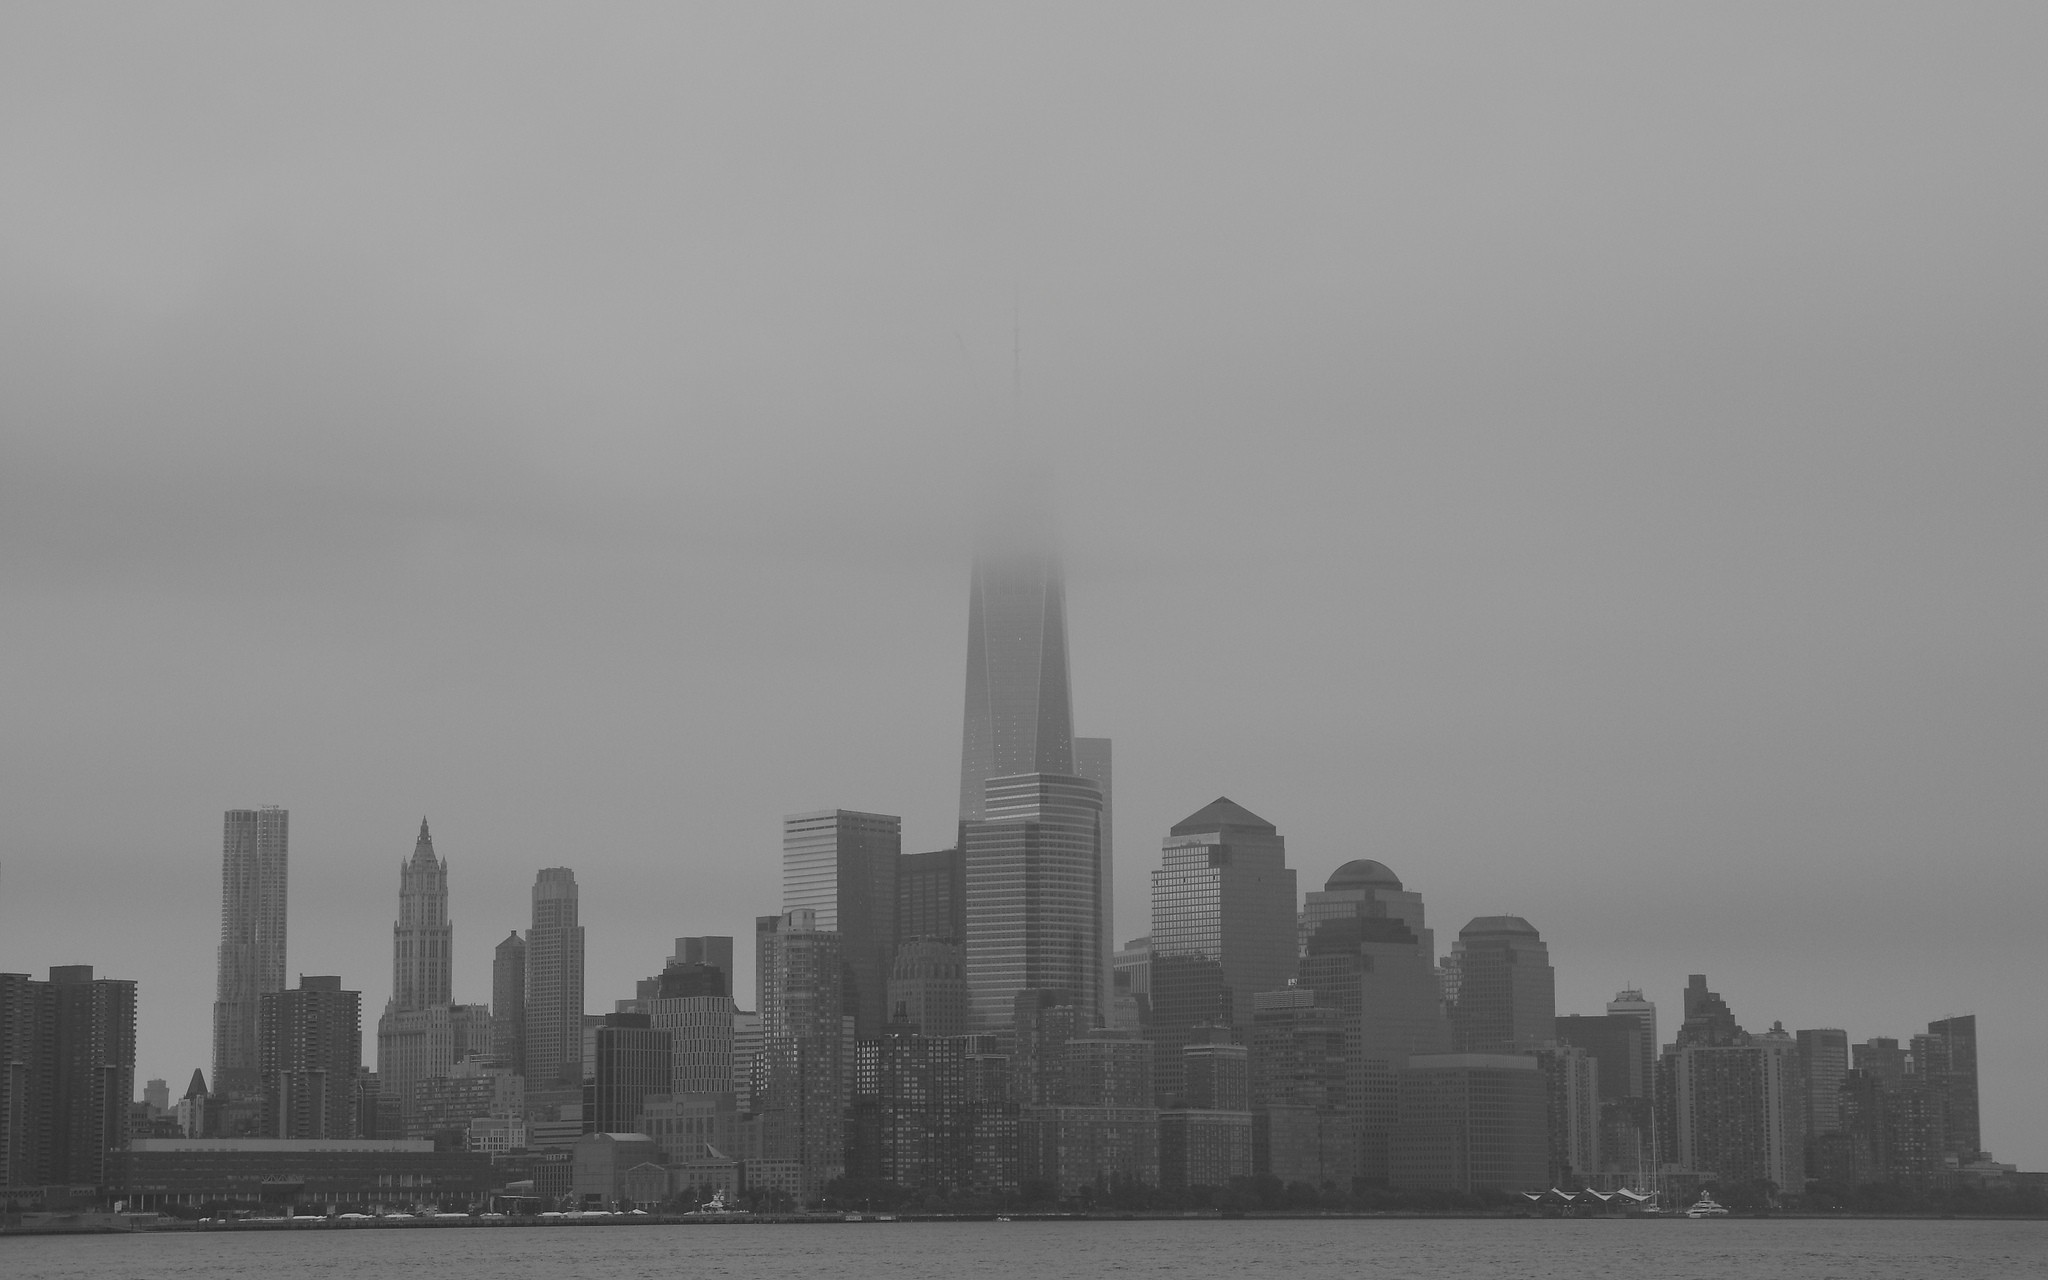 General 2048x1280 mist monochrome One World Trade Center skyscraper city urban building water New York City cityscape USA